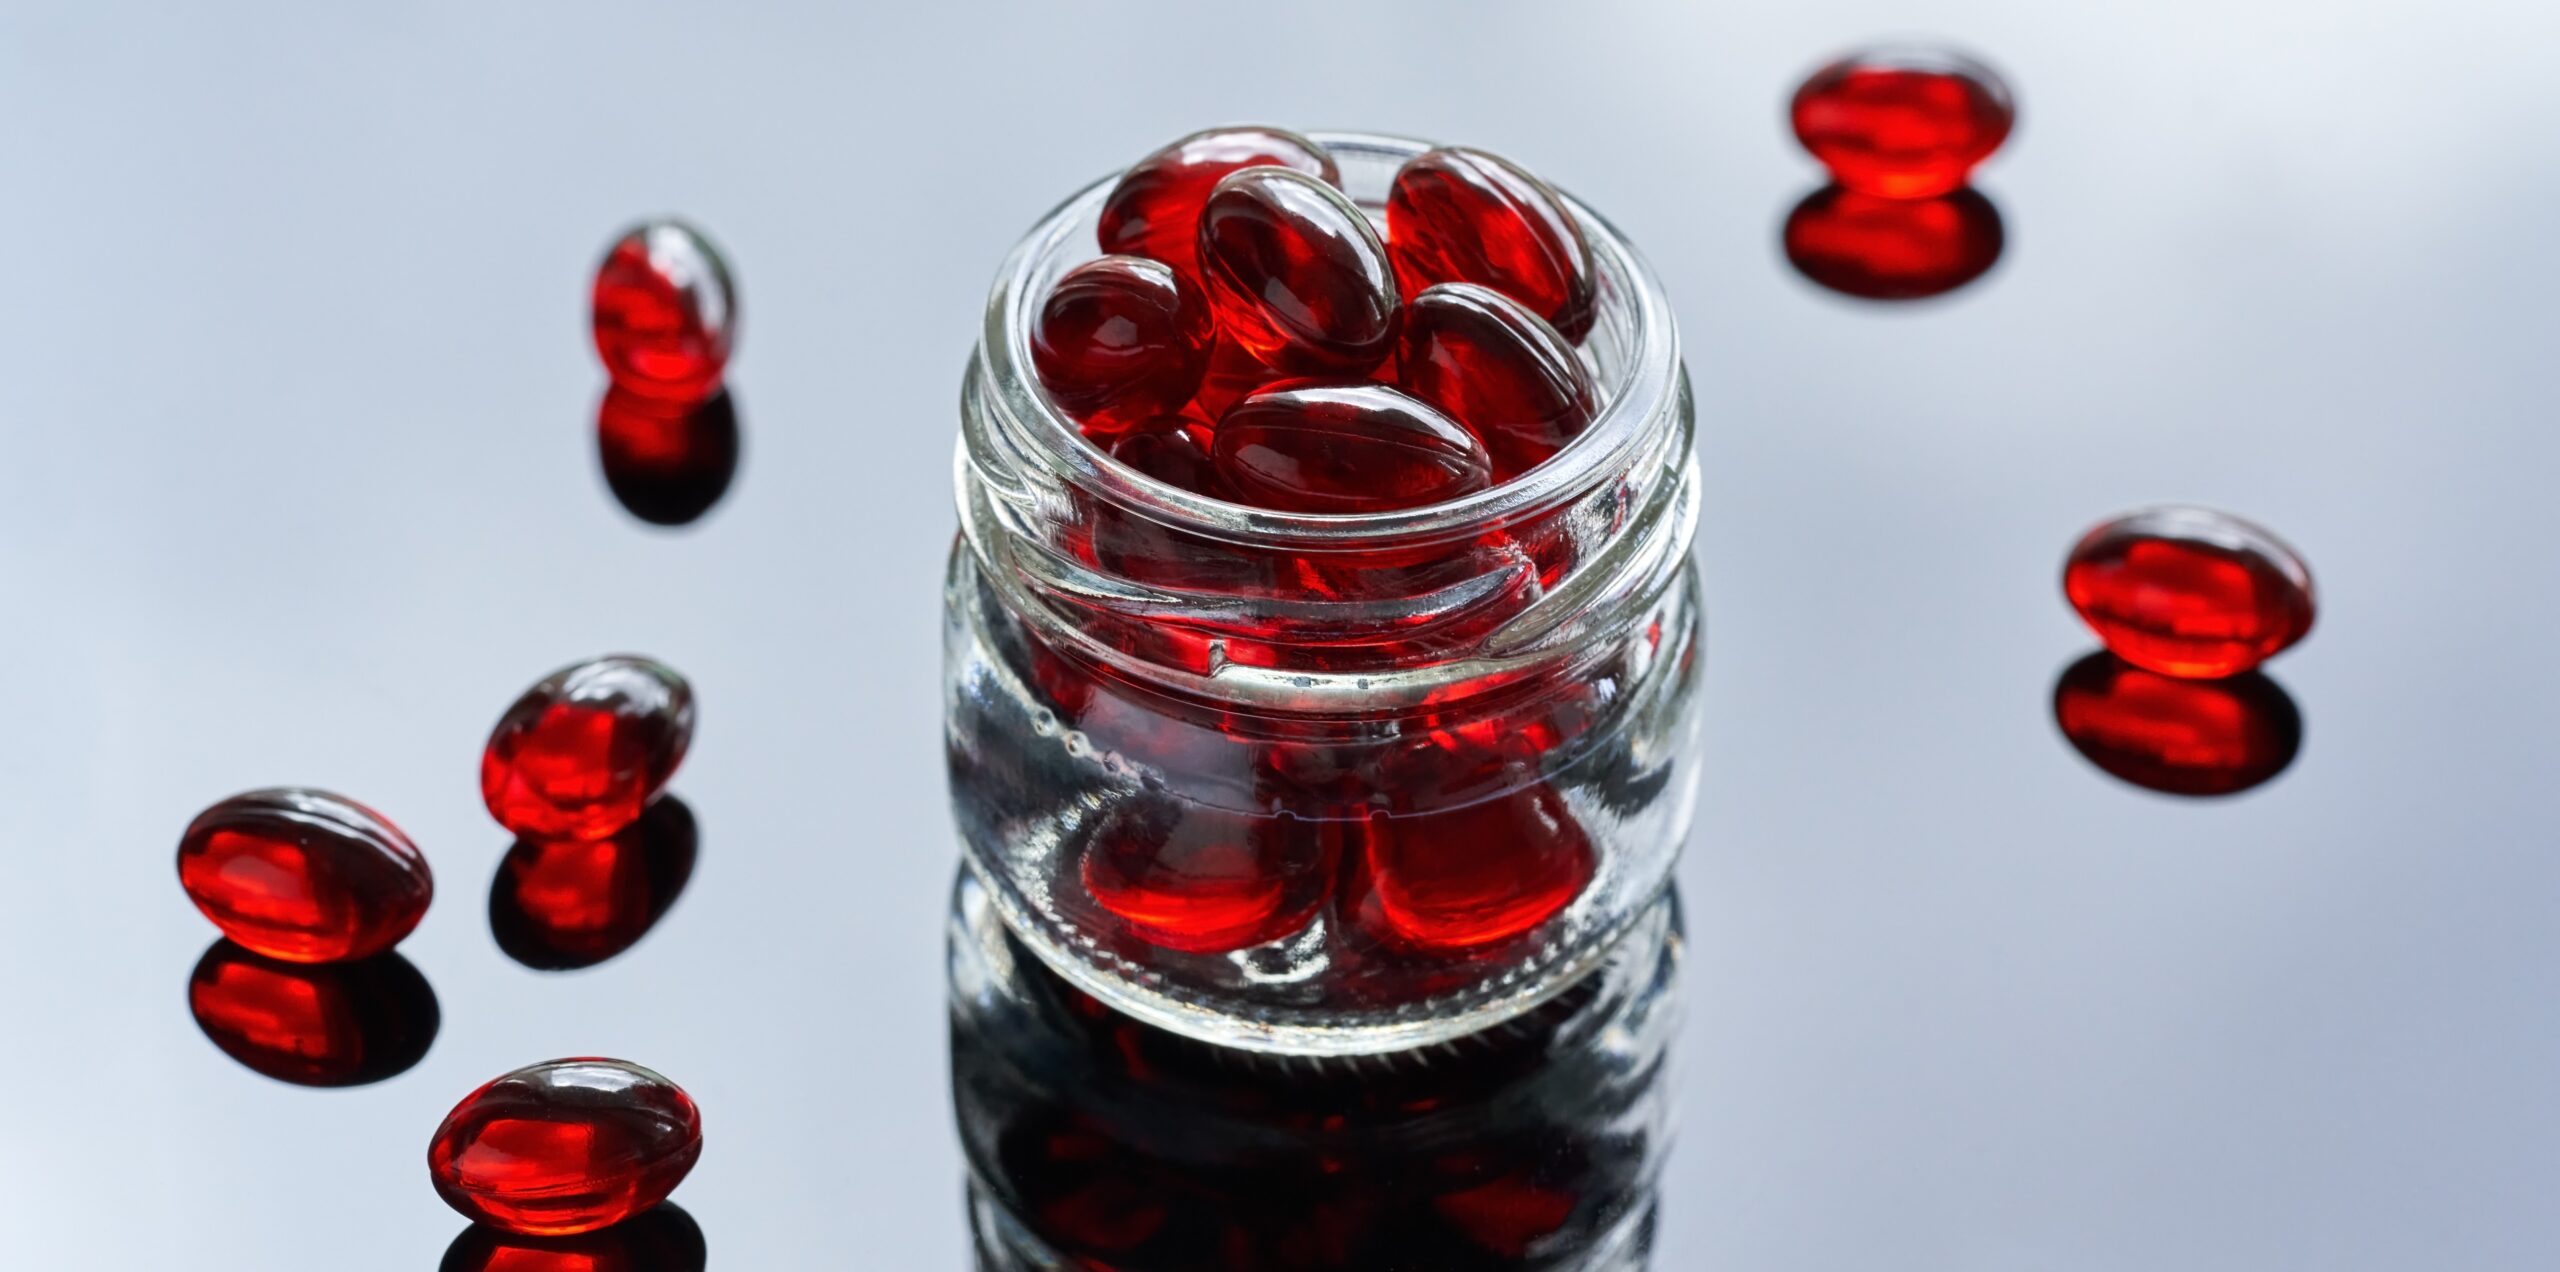 Krill oil reduces cognitive impairment in diabetes